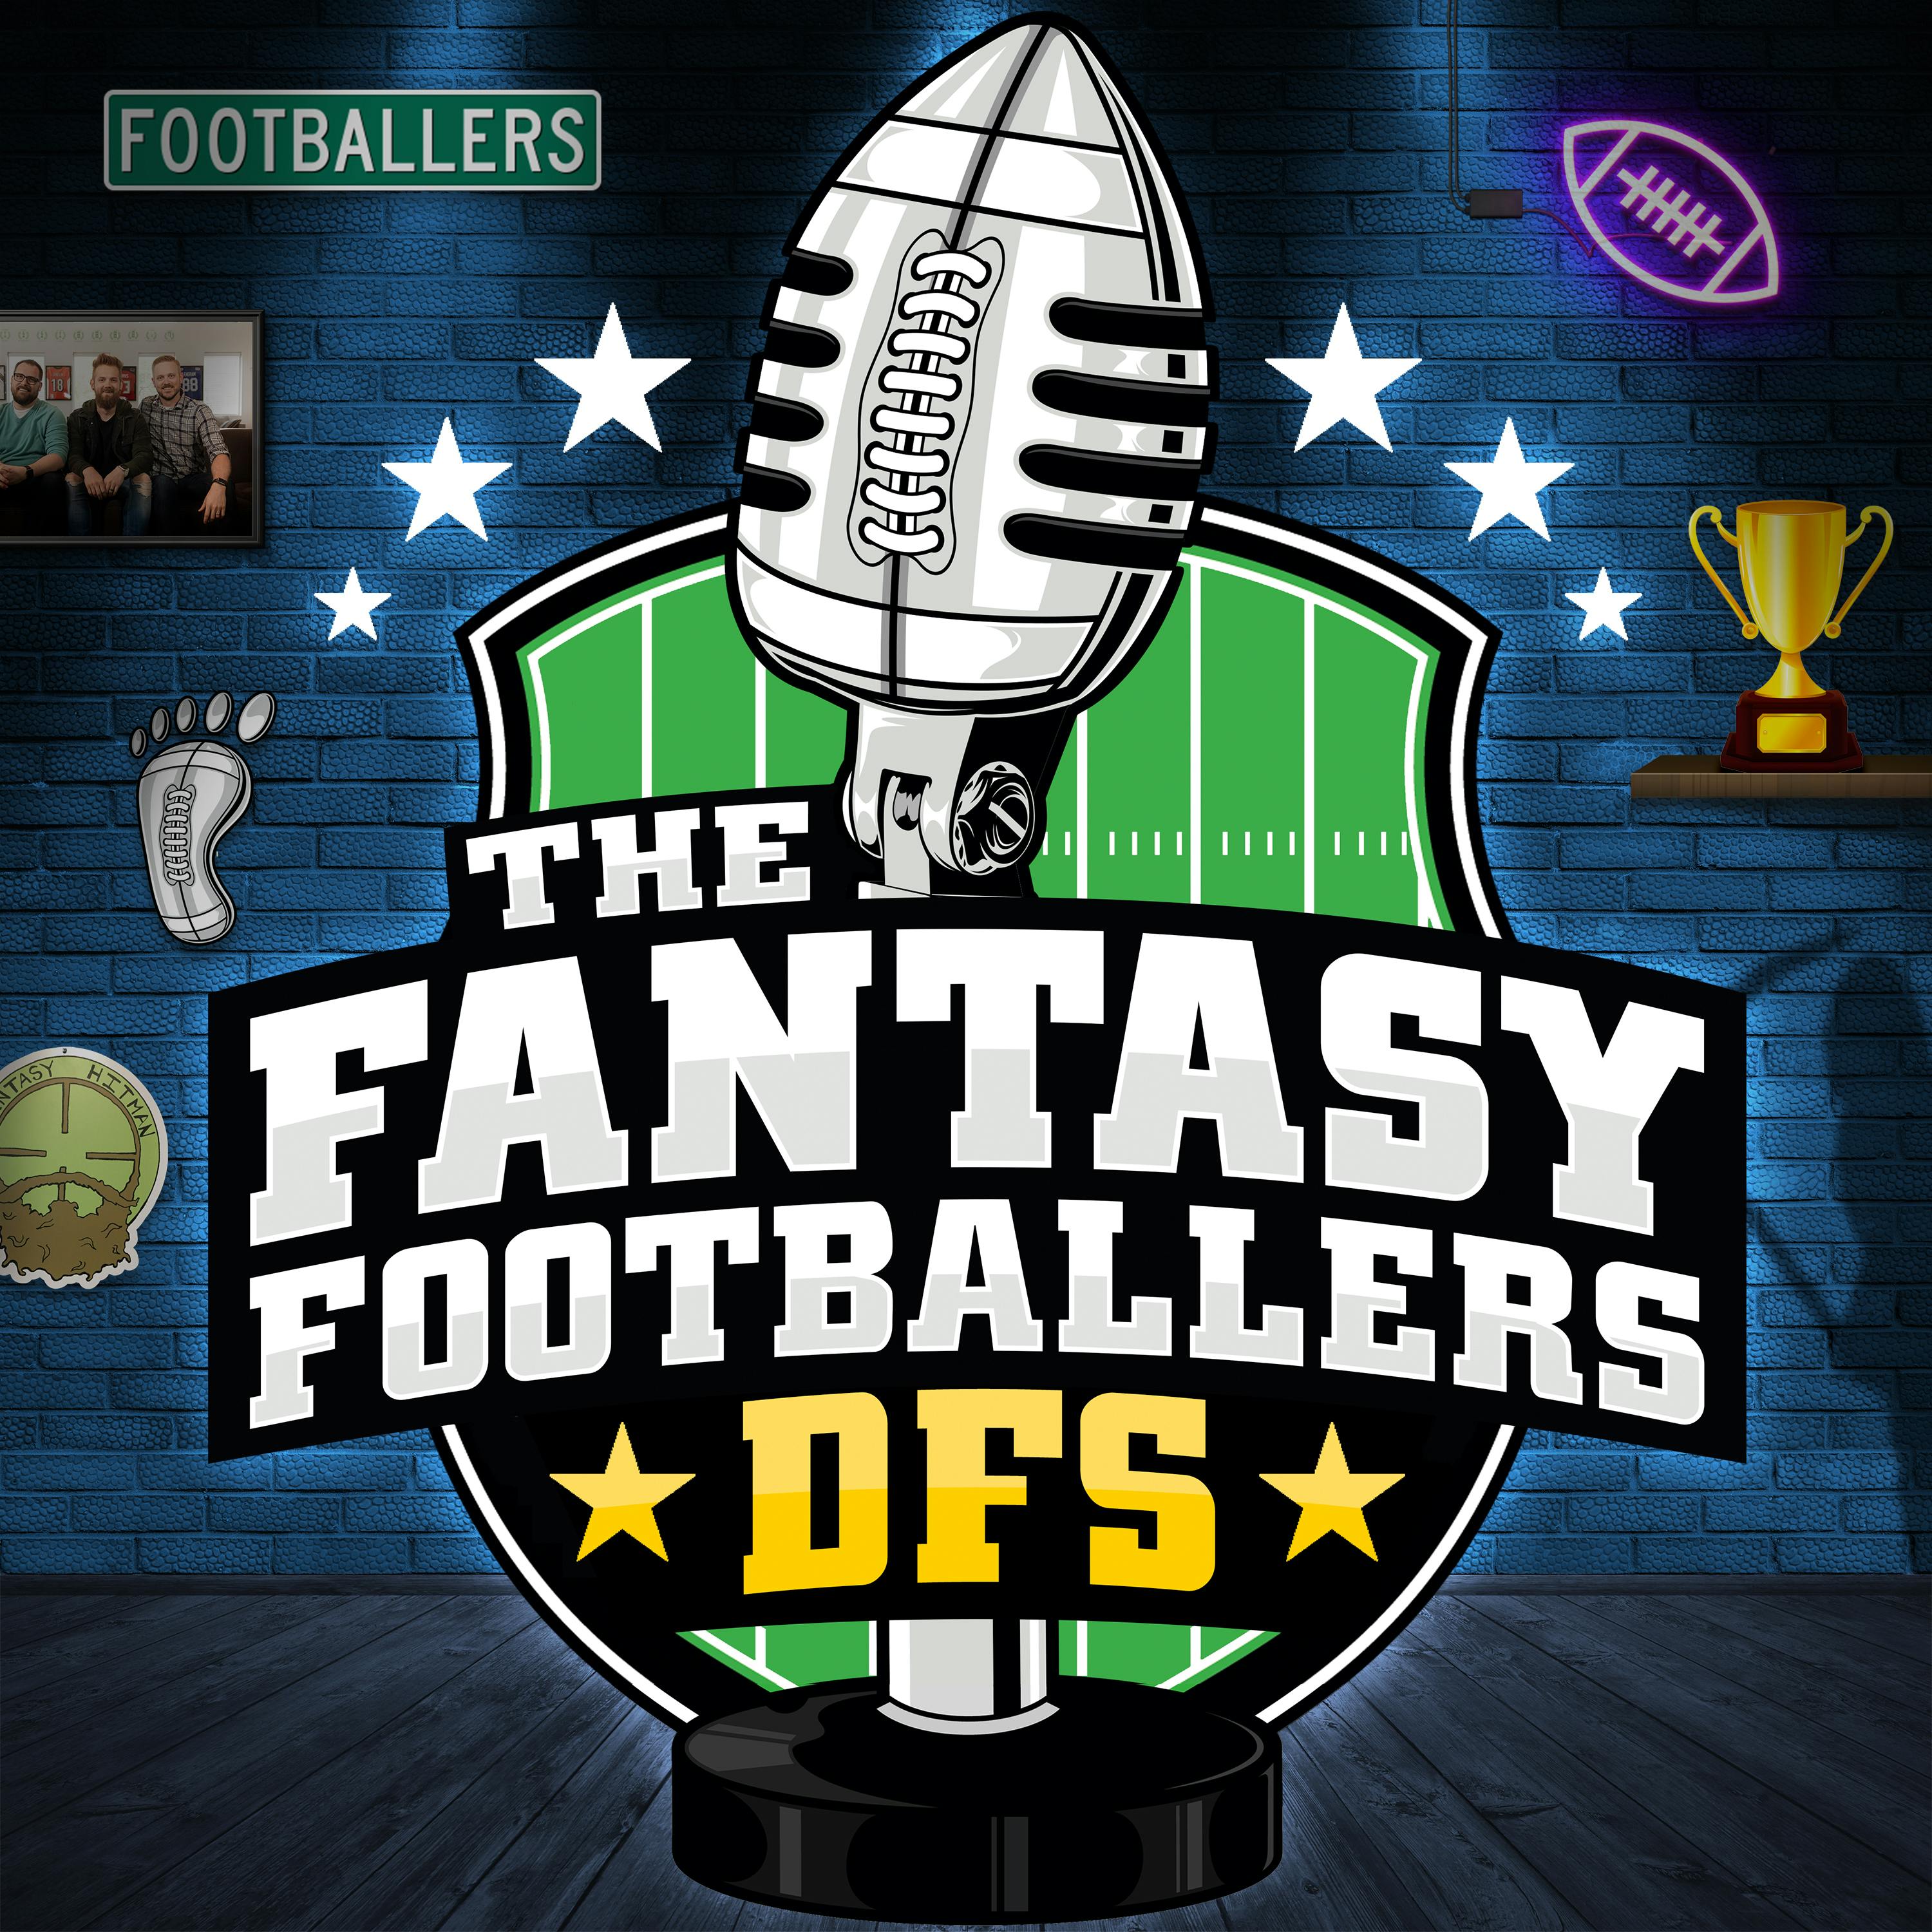 Week 14 DFS Podcast - Fantasy Football DFS